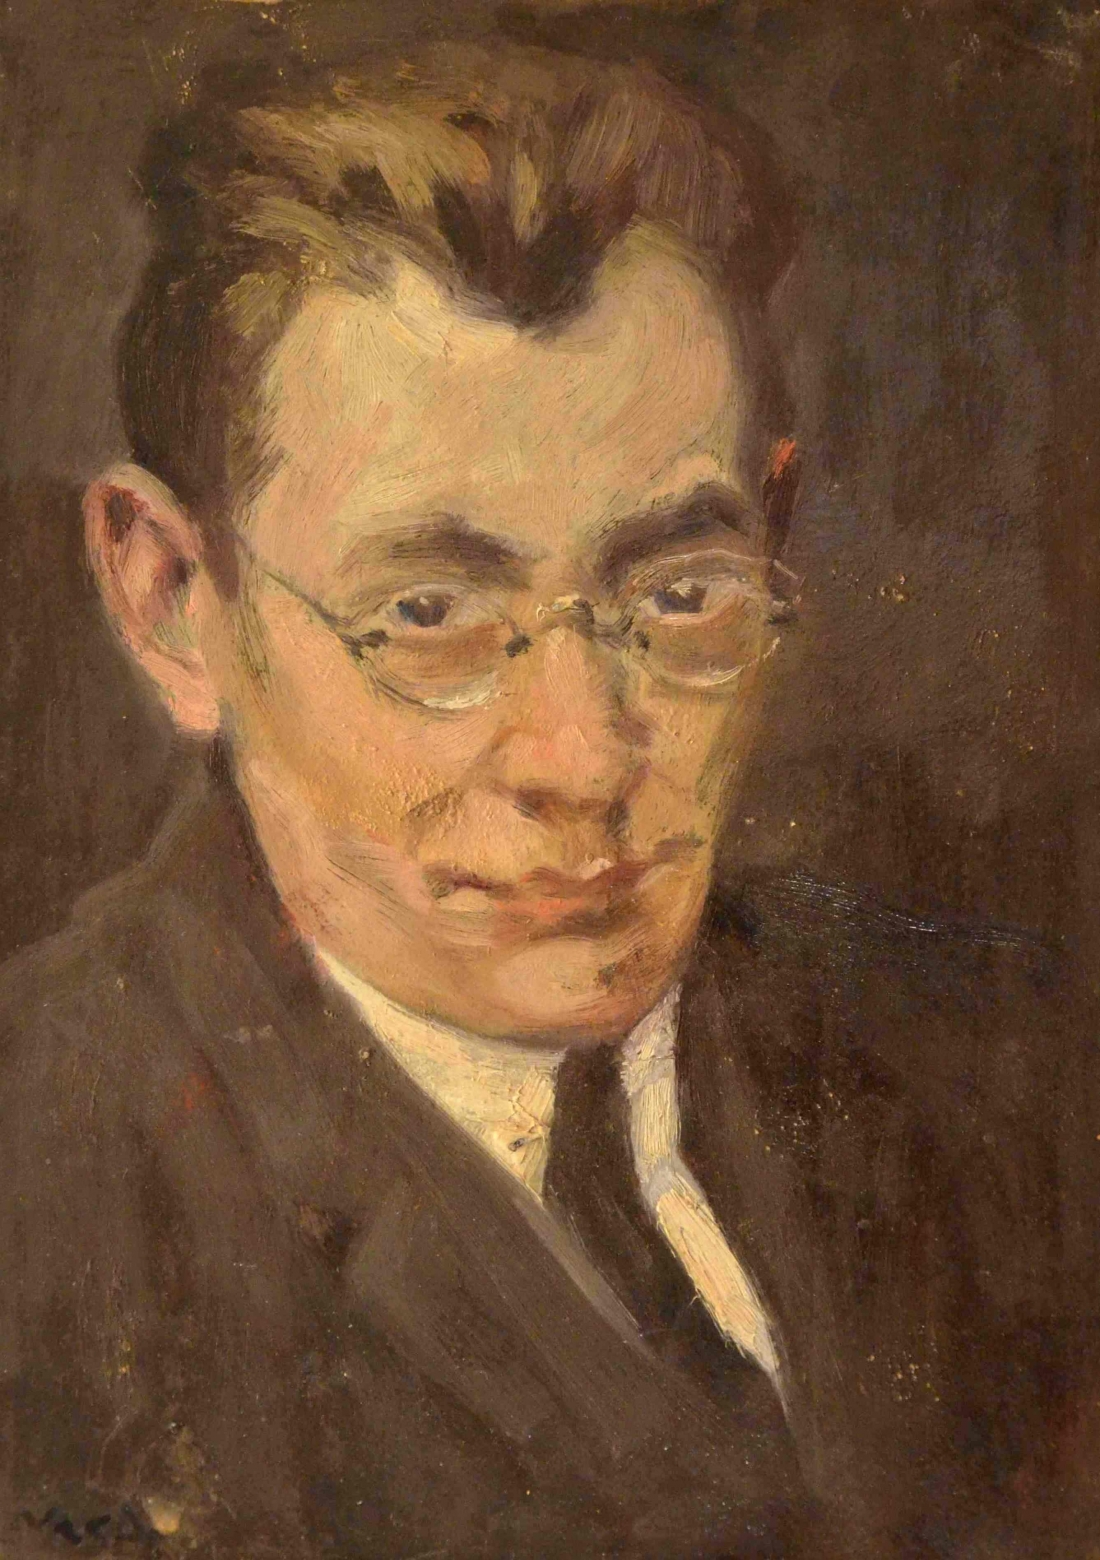 Zorkóczy, Gyula (1873 - 1932) - famous hungarian painter, graphic